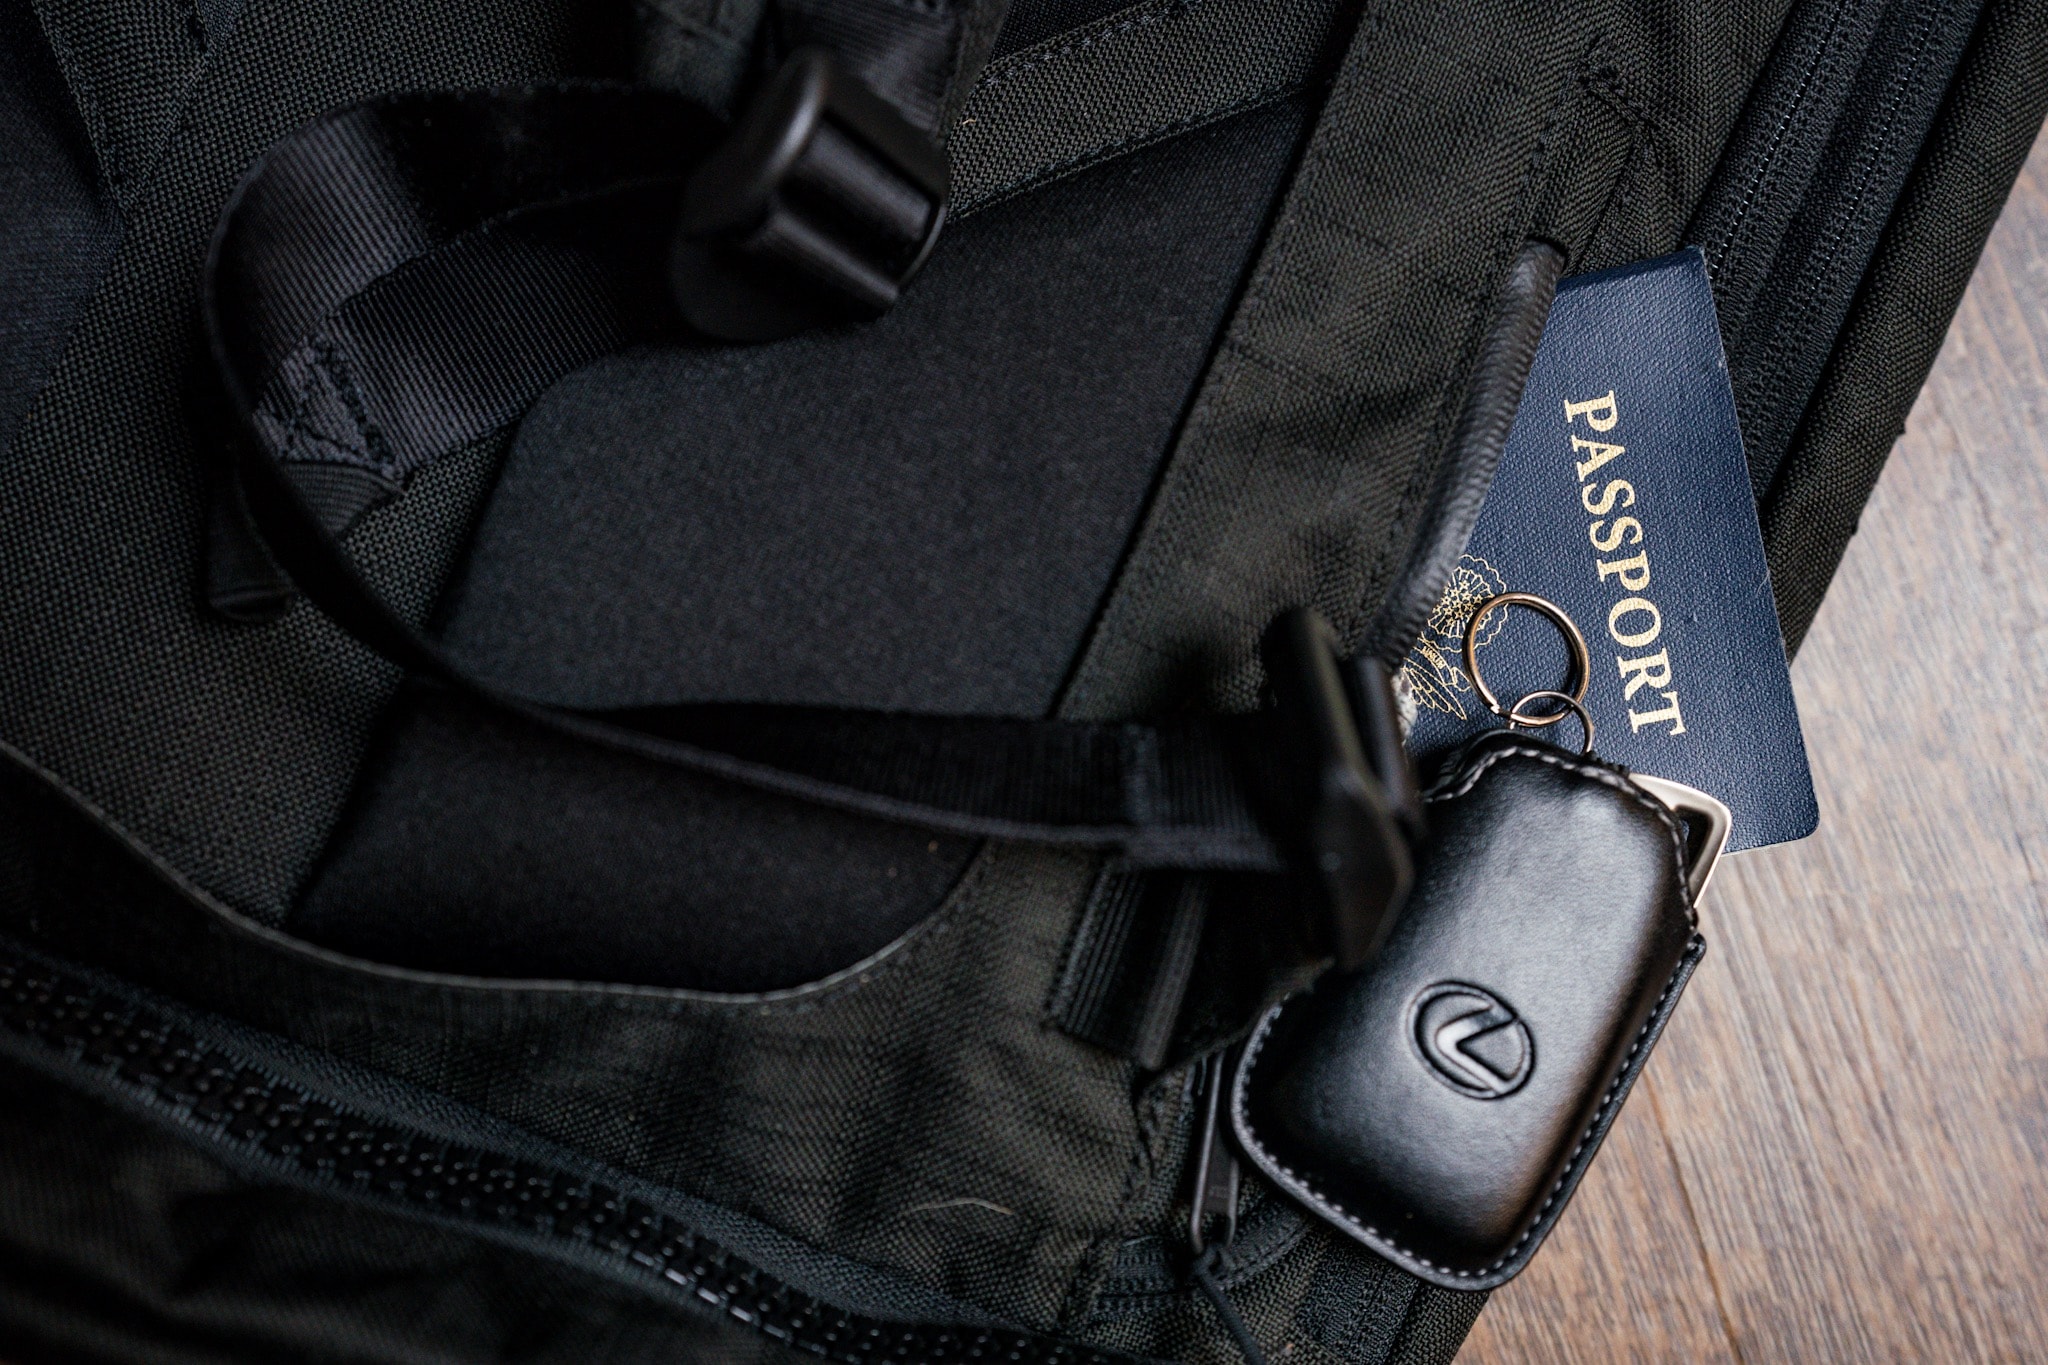 Passport and Lexus car keys in backpack